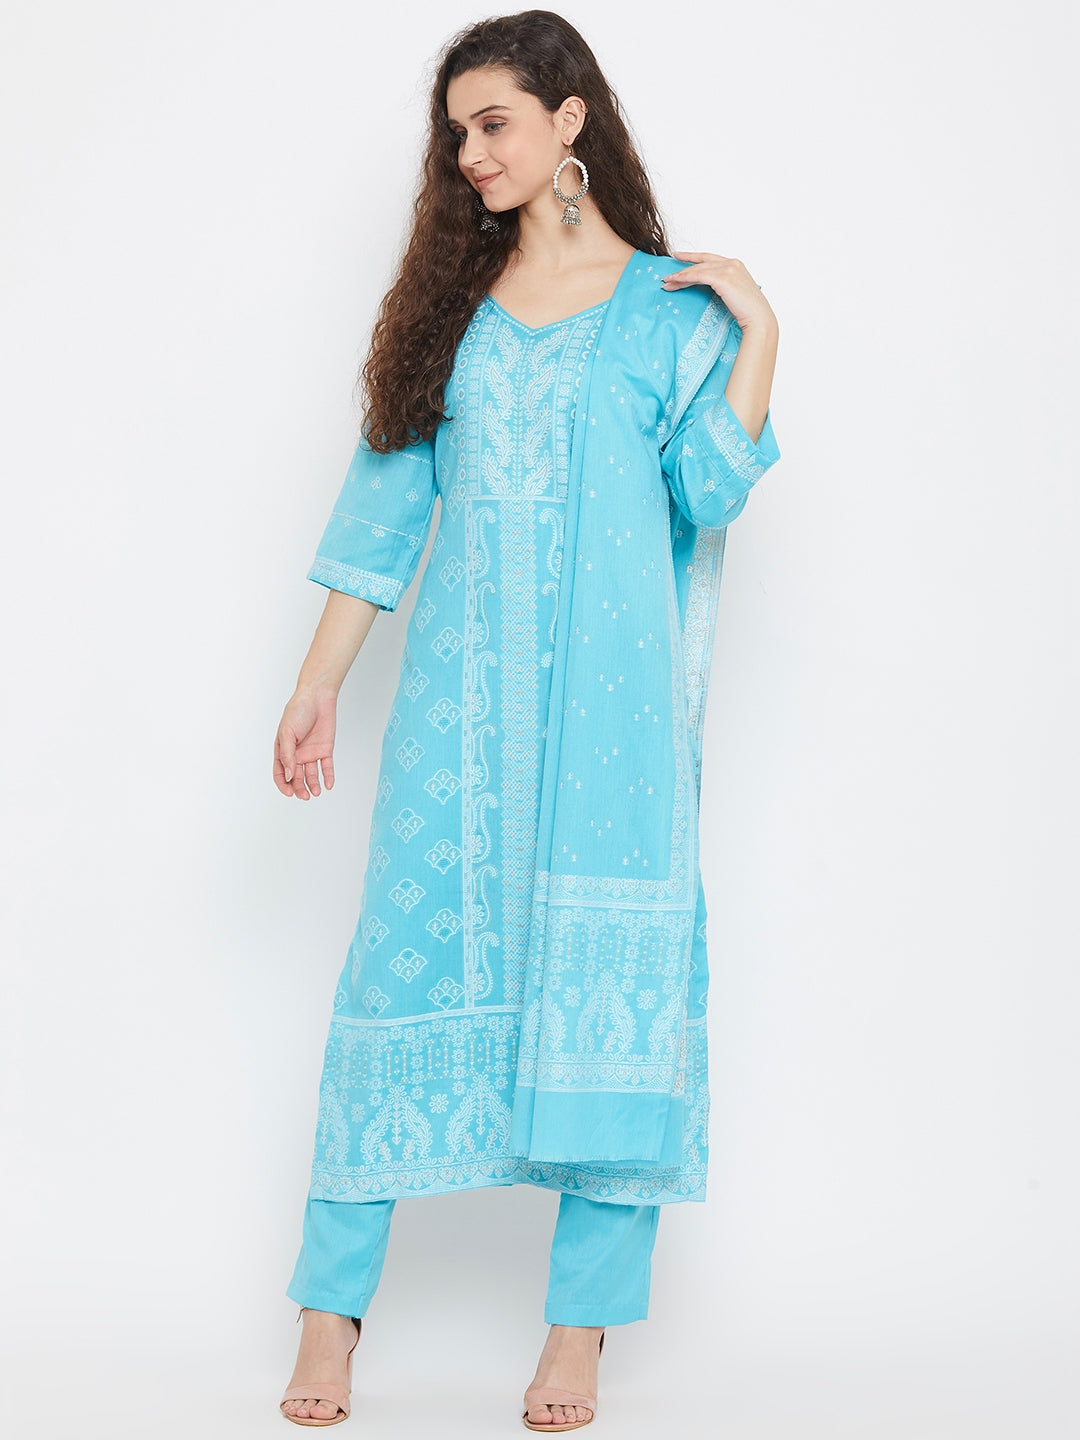 Cotton Jacquard Zari Woven Ferozi Dress Material with Cotton Silk Dupatta